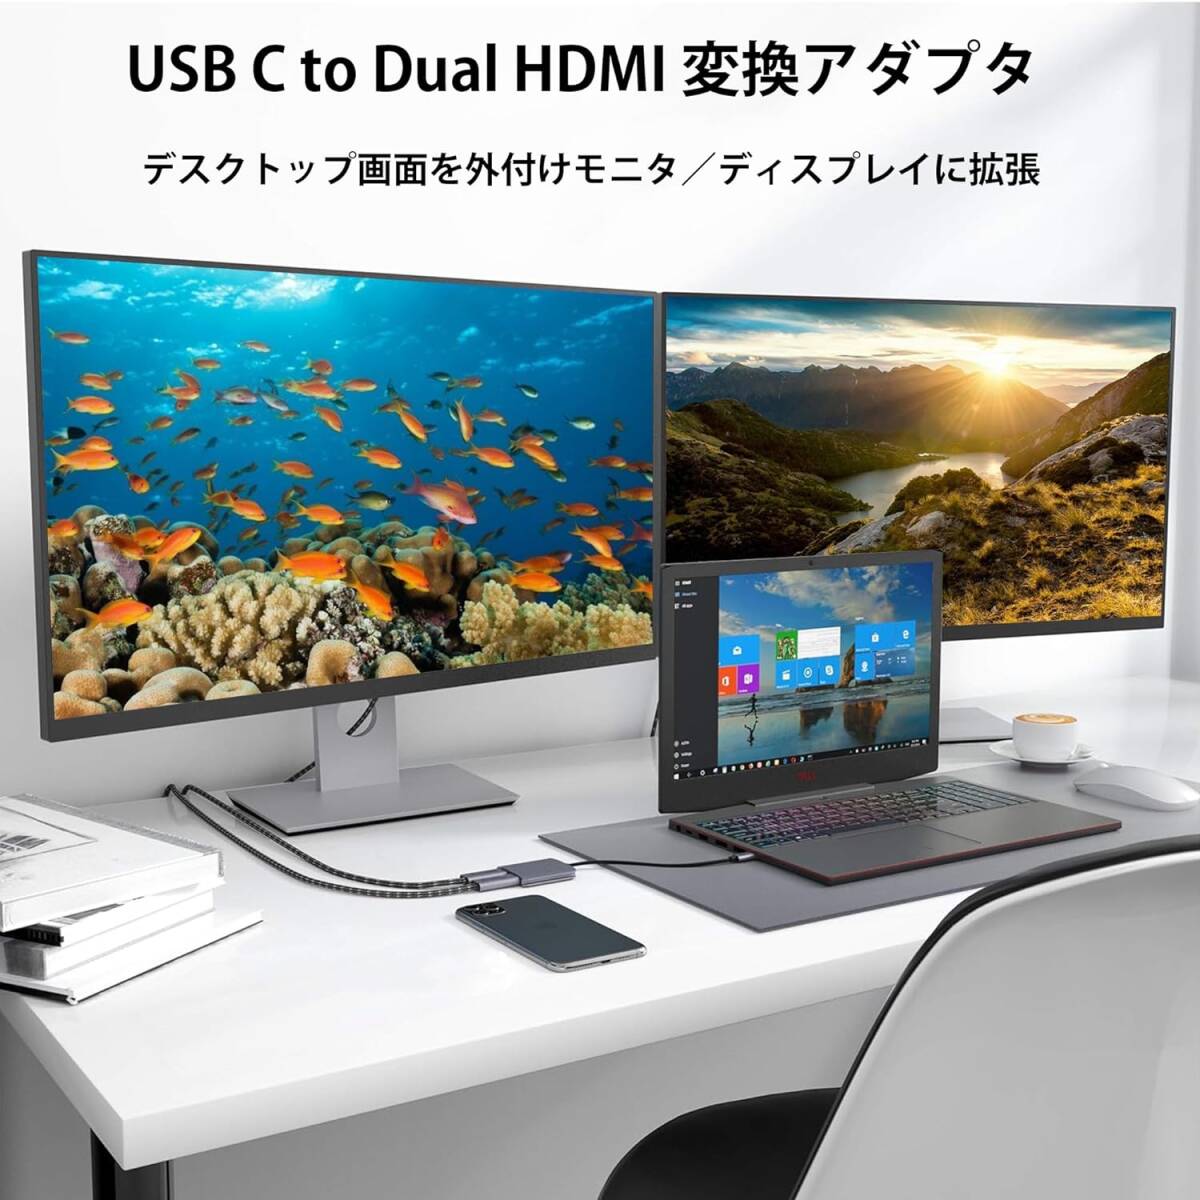 710 USB C HDMI 変換アダプター Aibilangose デュアル HDMI Type-C マルチディスプレイアダプタ 拡張/複製 【2つのHDMI+USB3.0+PD充電】の画像7